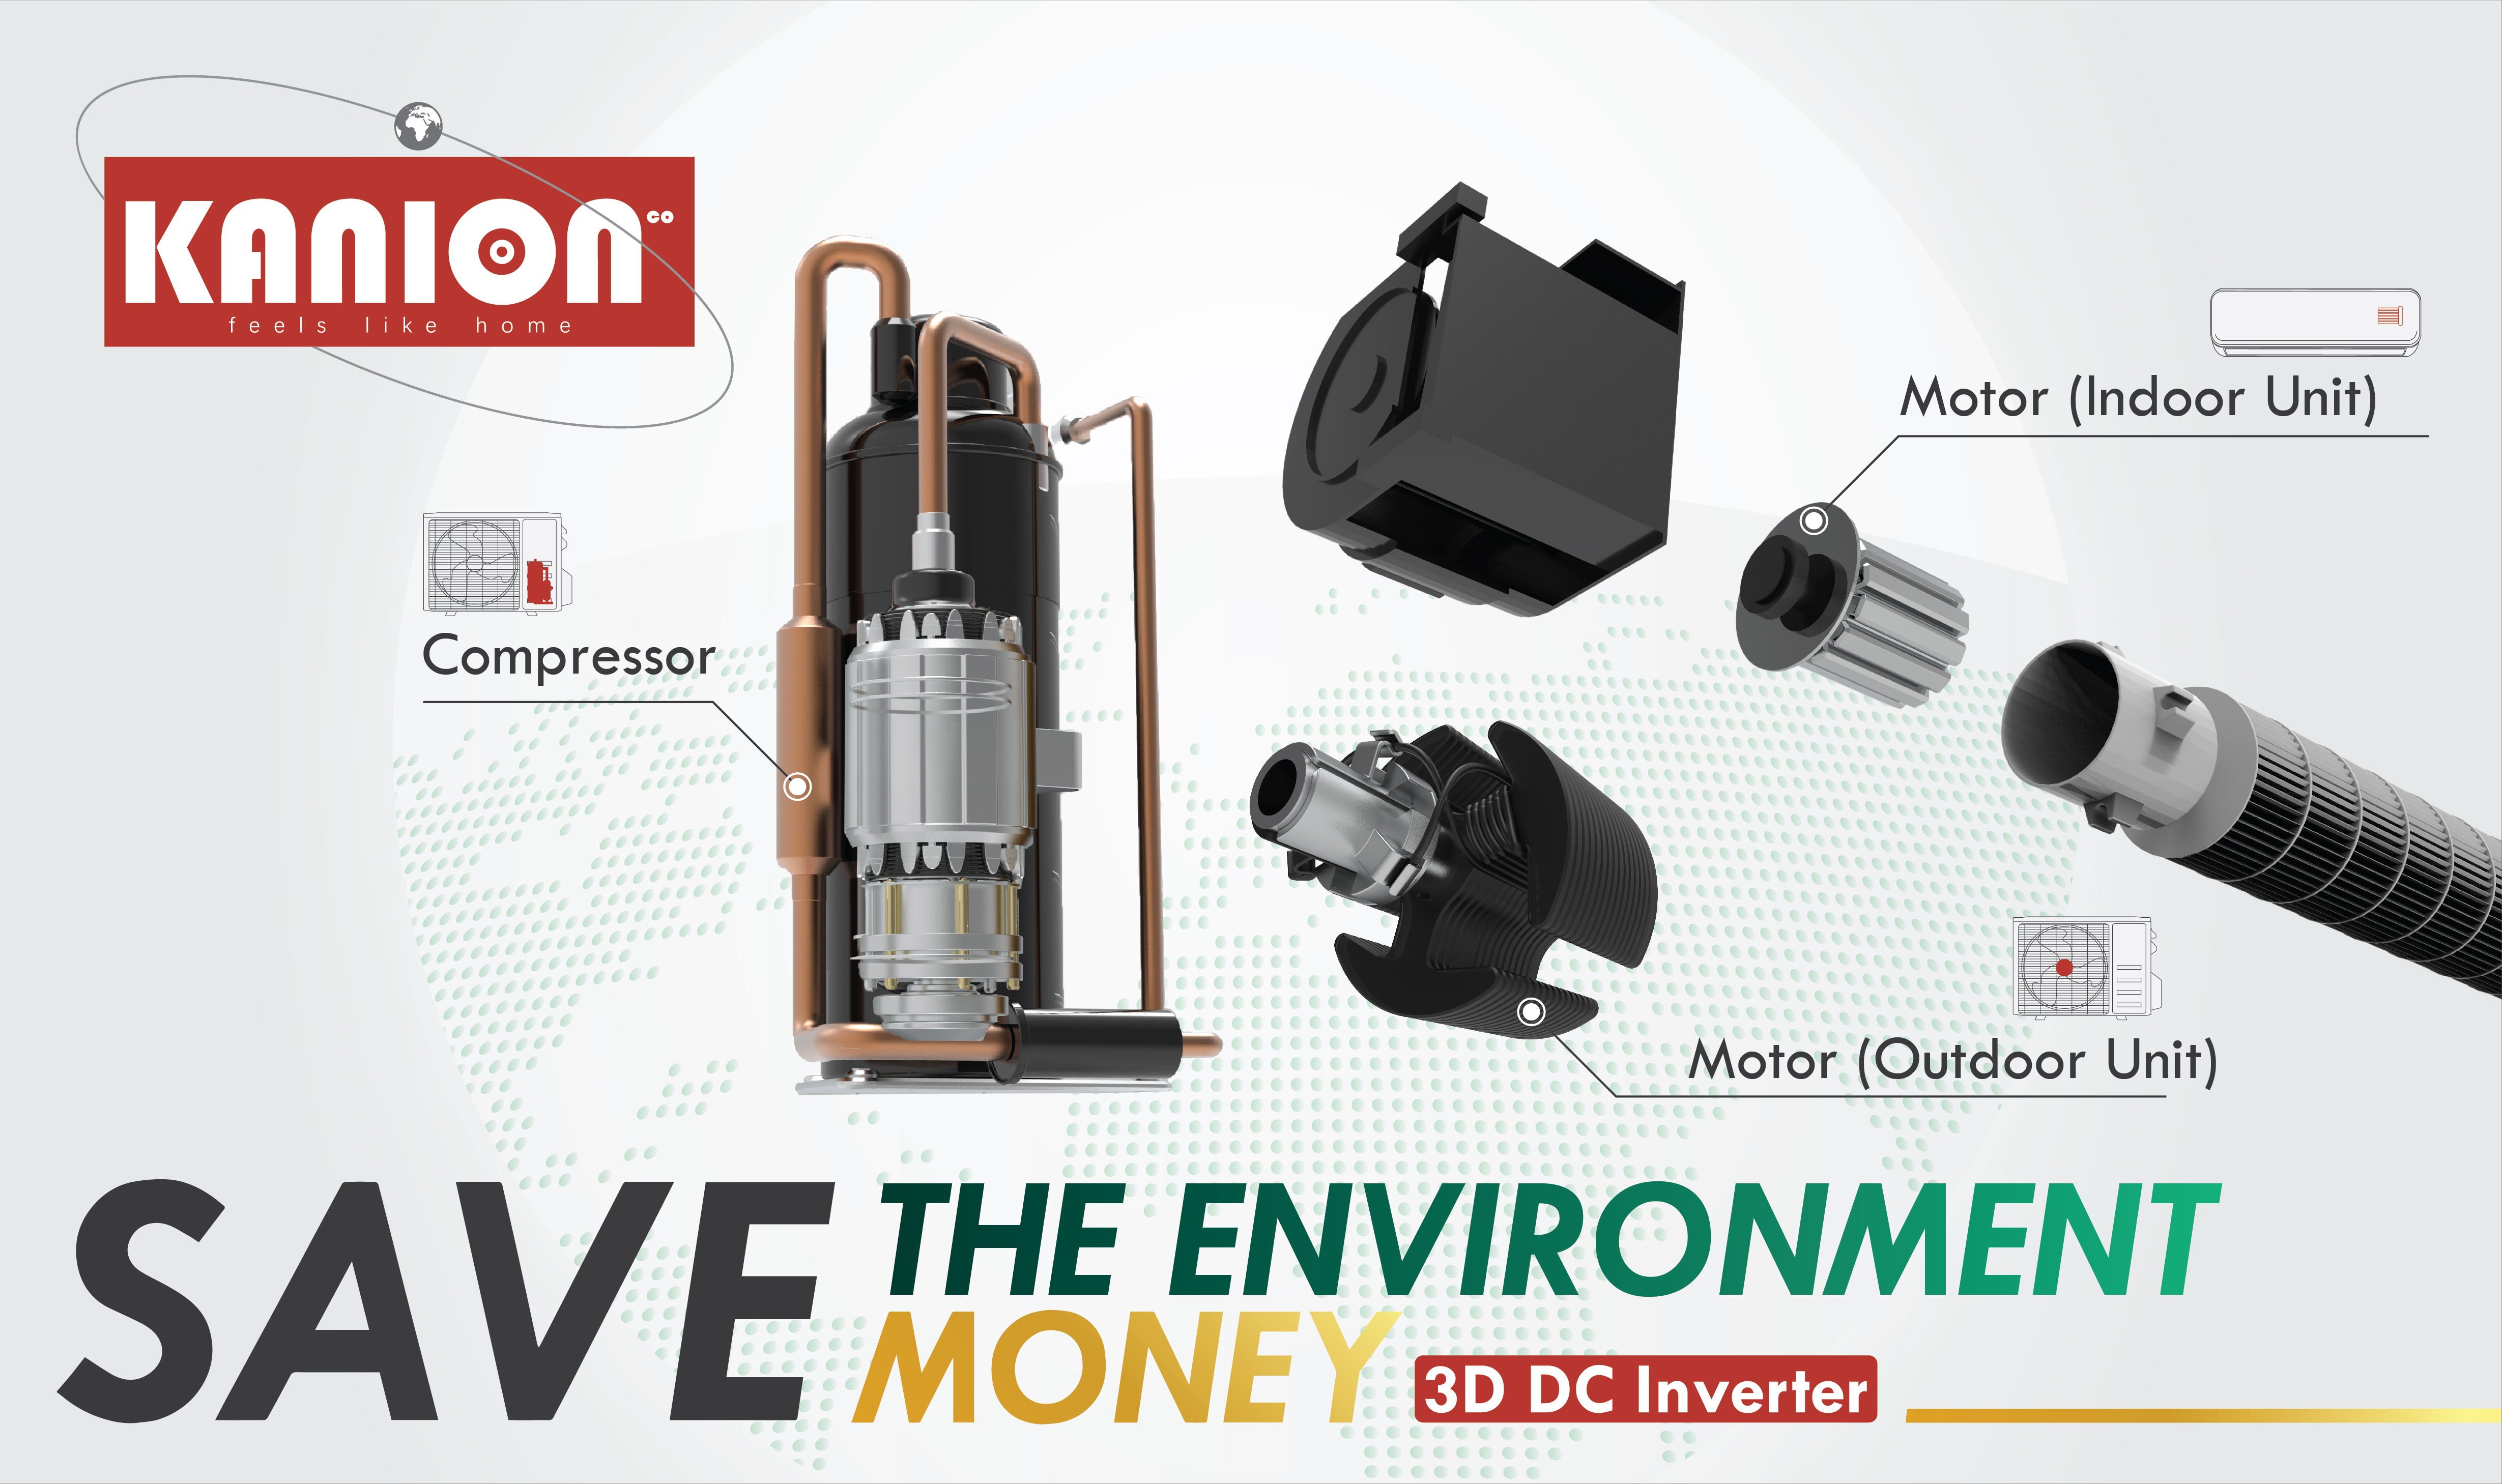 Save the environment money 3D DC inverter